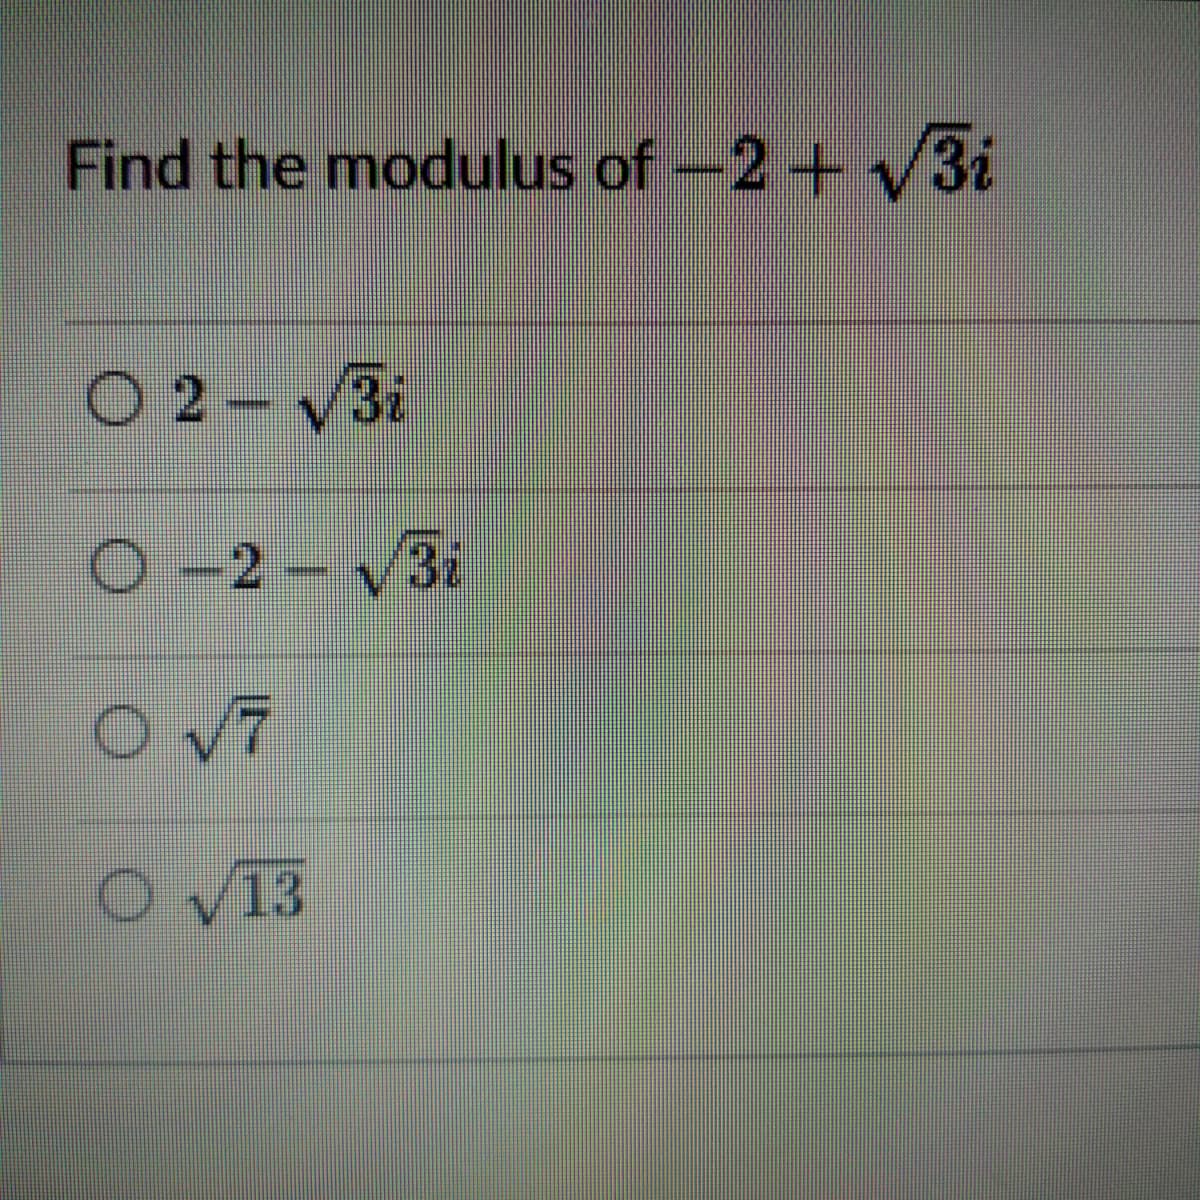 Find the modulus of-2+ V3i
O 2- V3i
0-2
22-V3i
O V13
